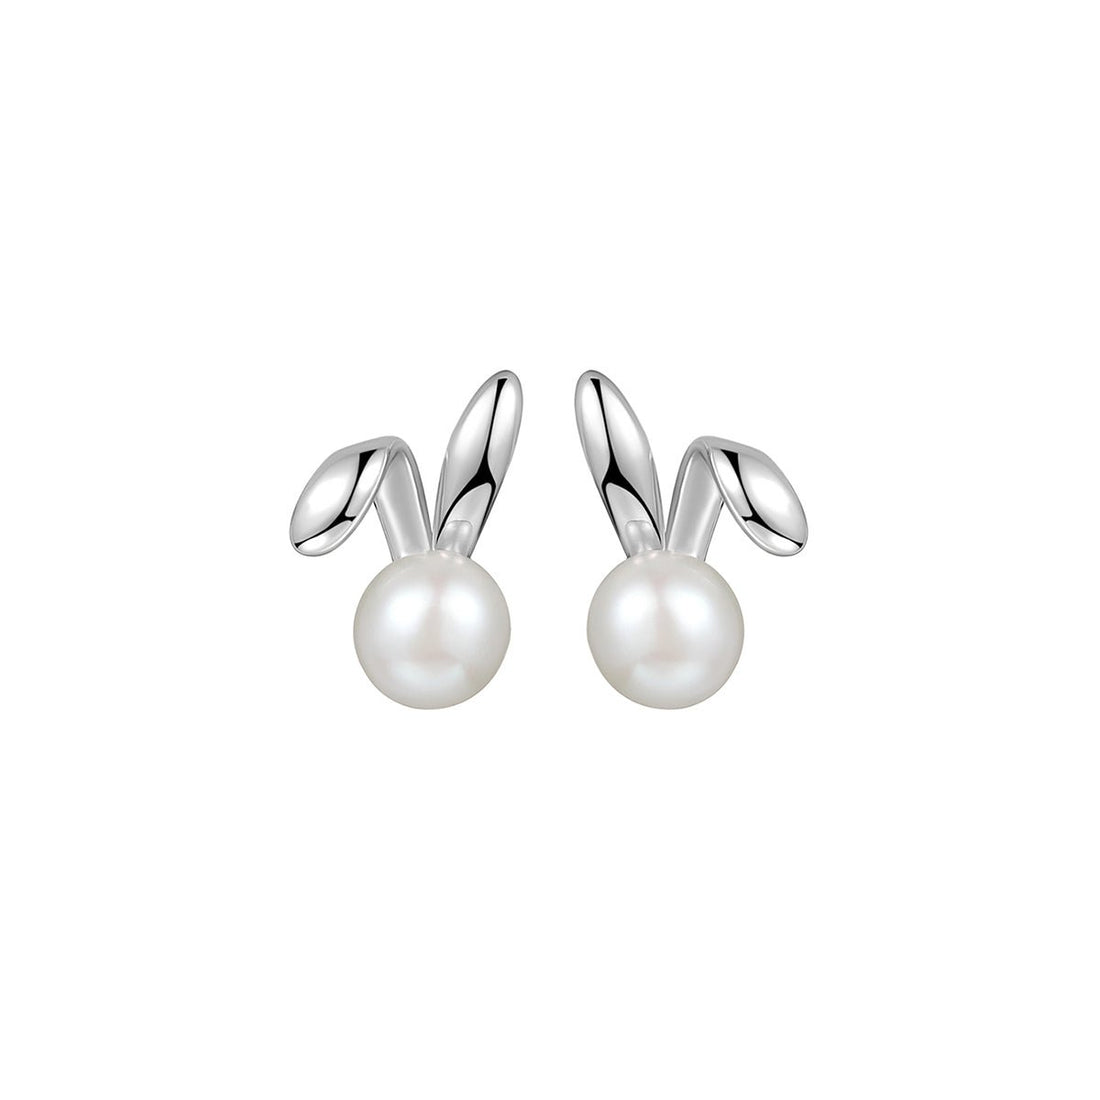 Smug Bunny Silver Earrings - 0cm